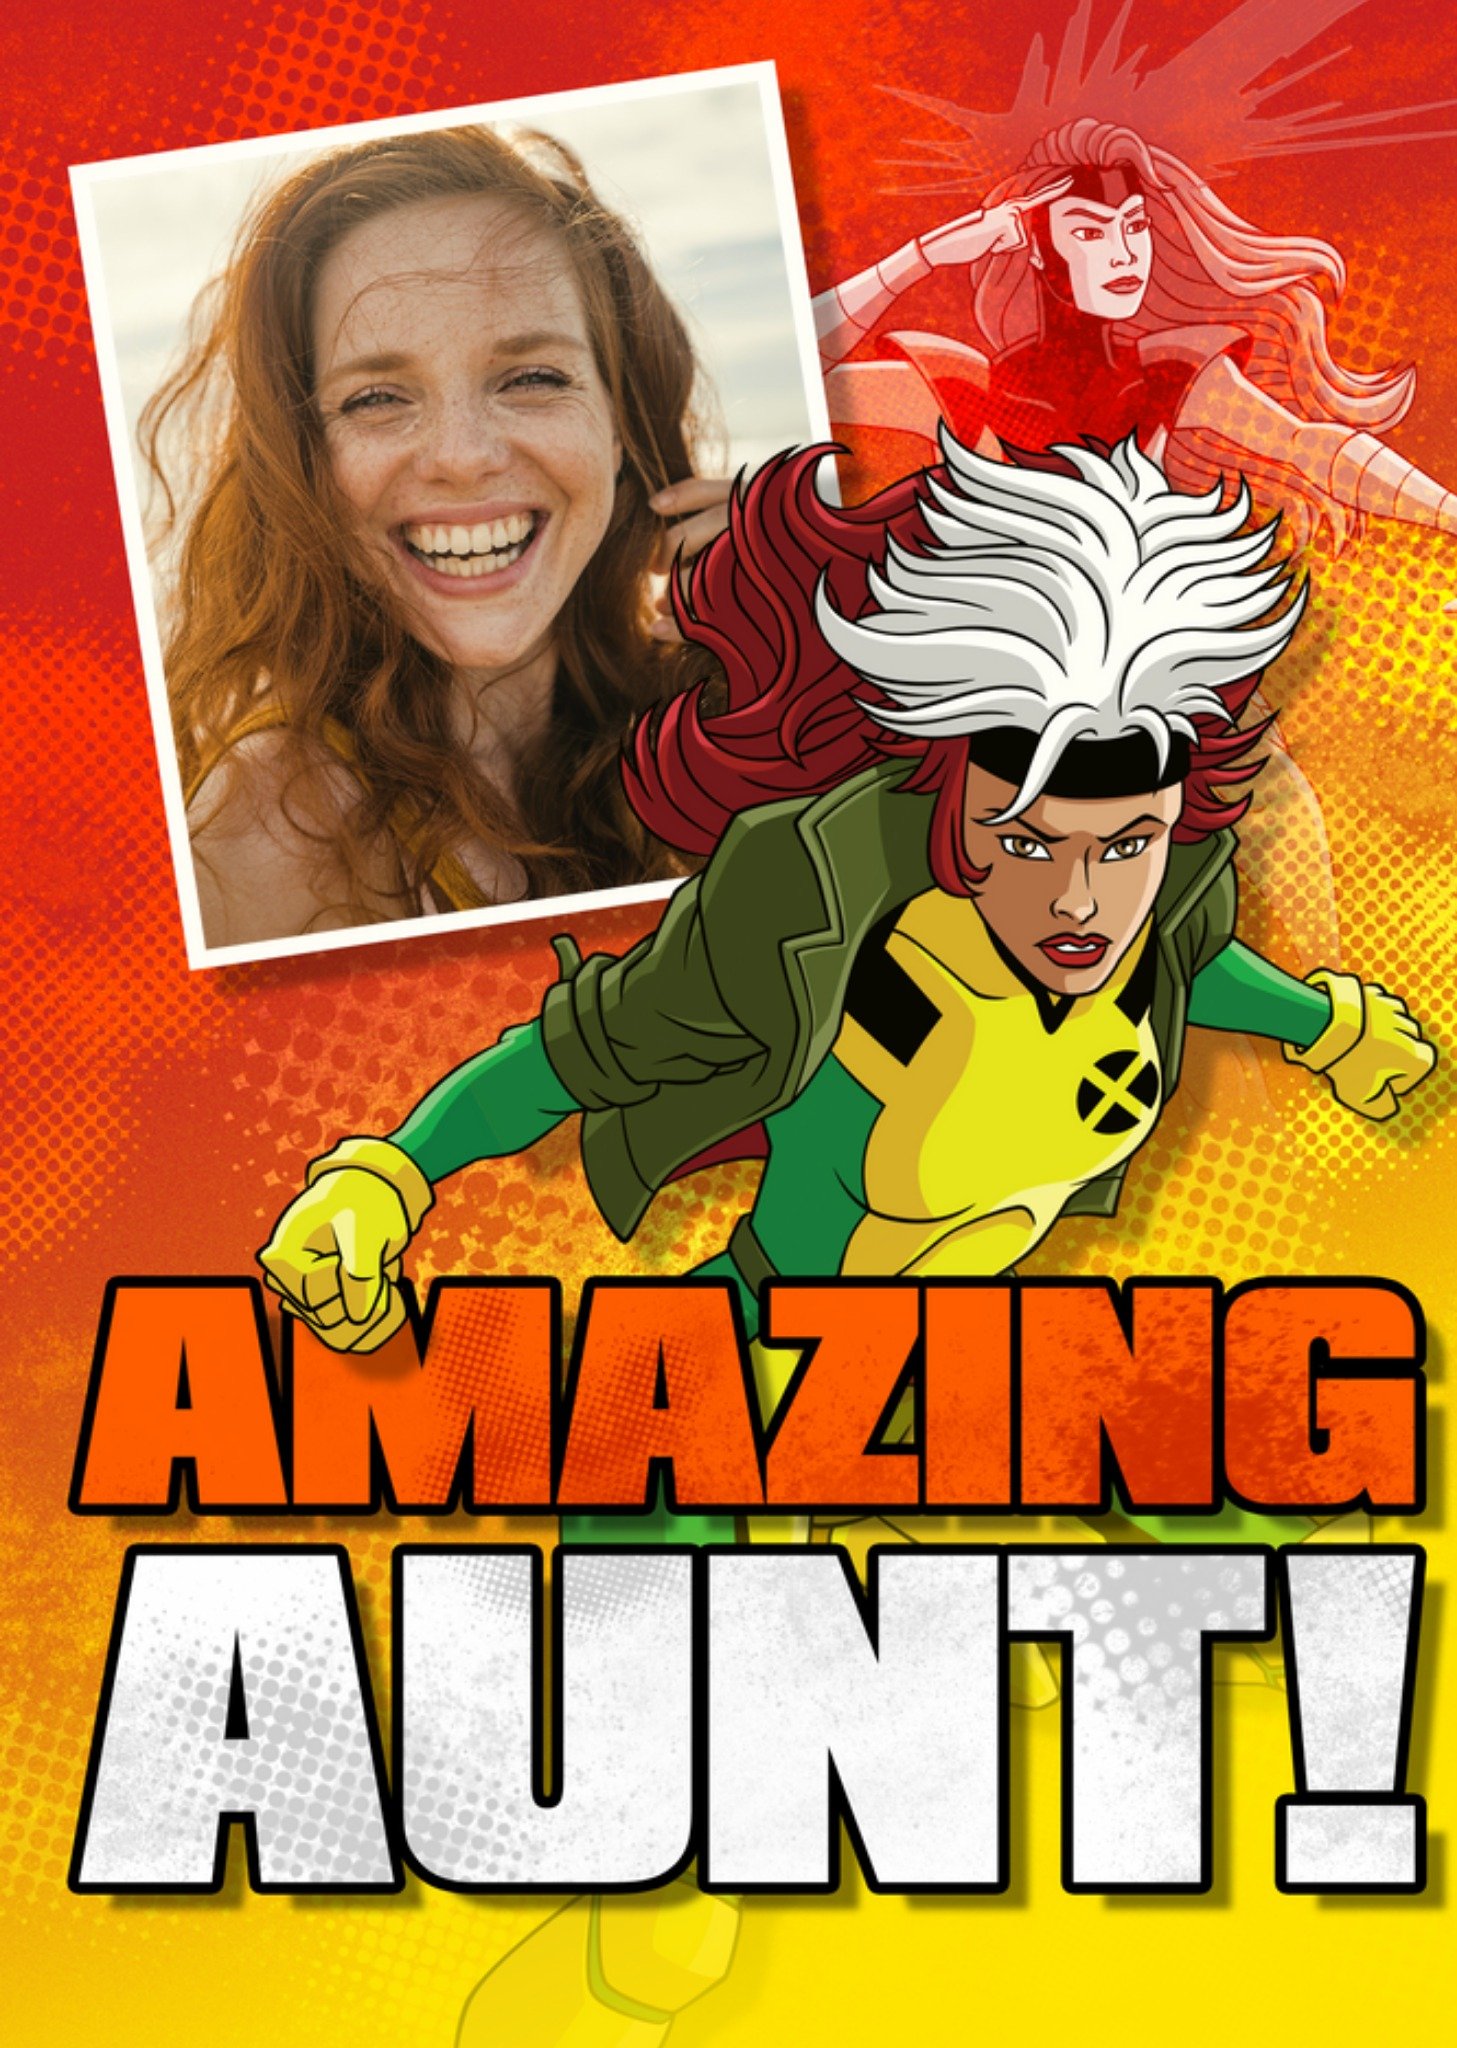 Marvel Xmen Amazing Aunt Card Ecard